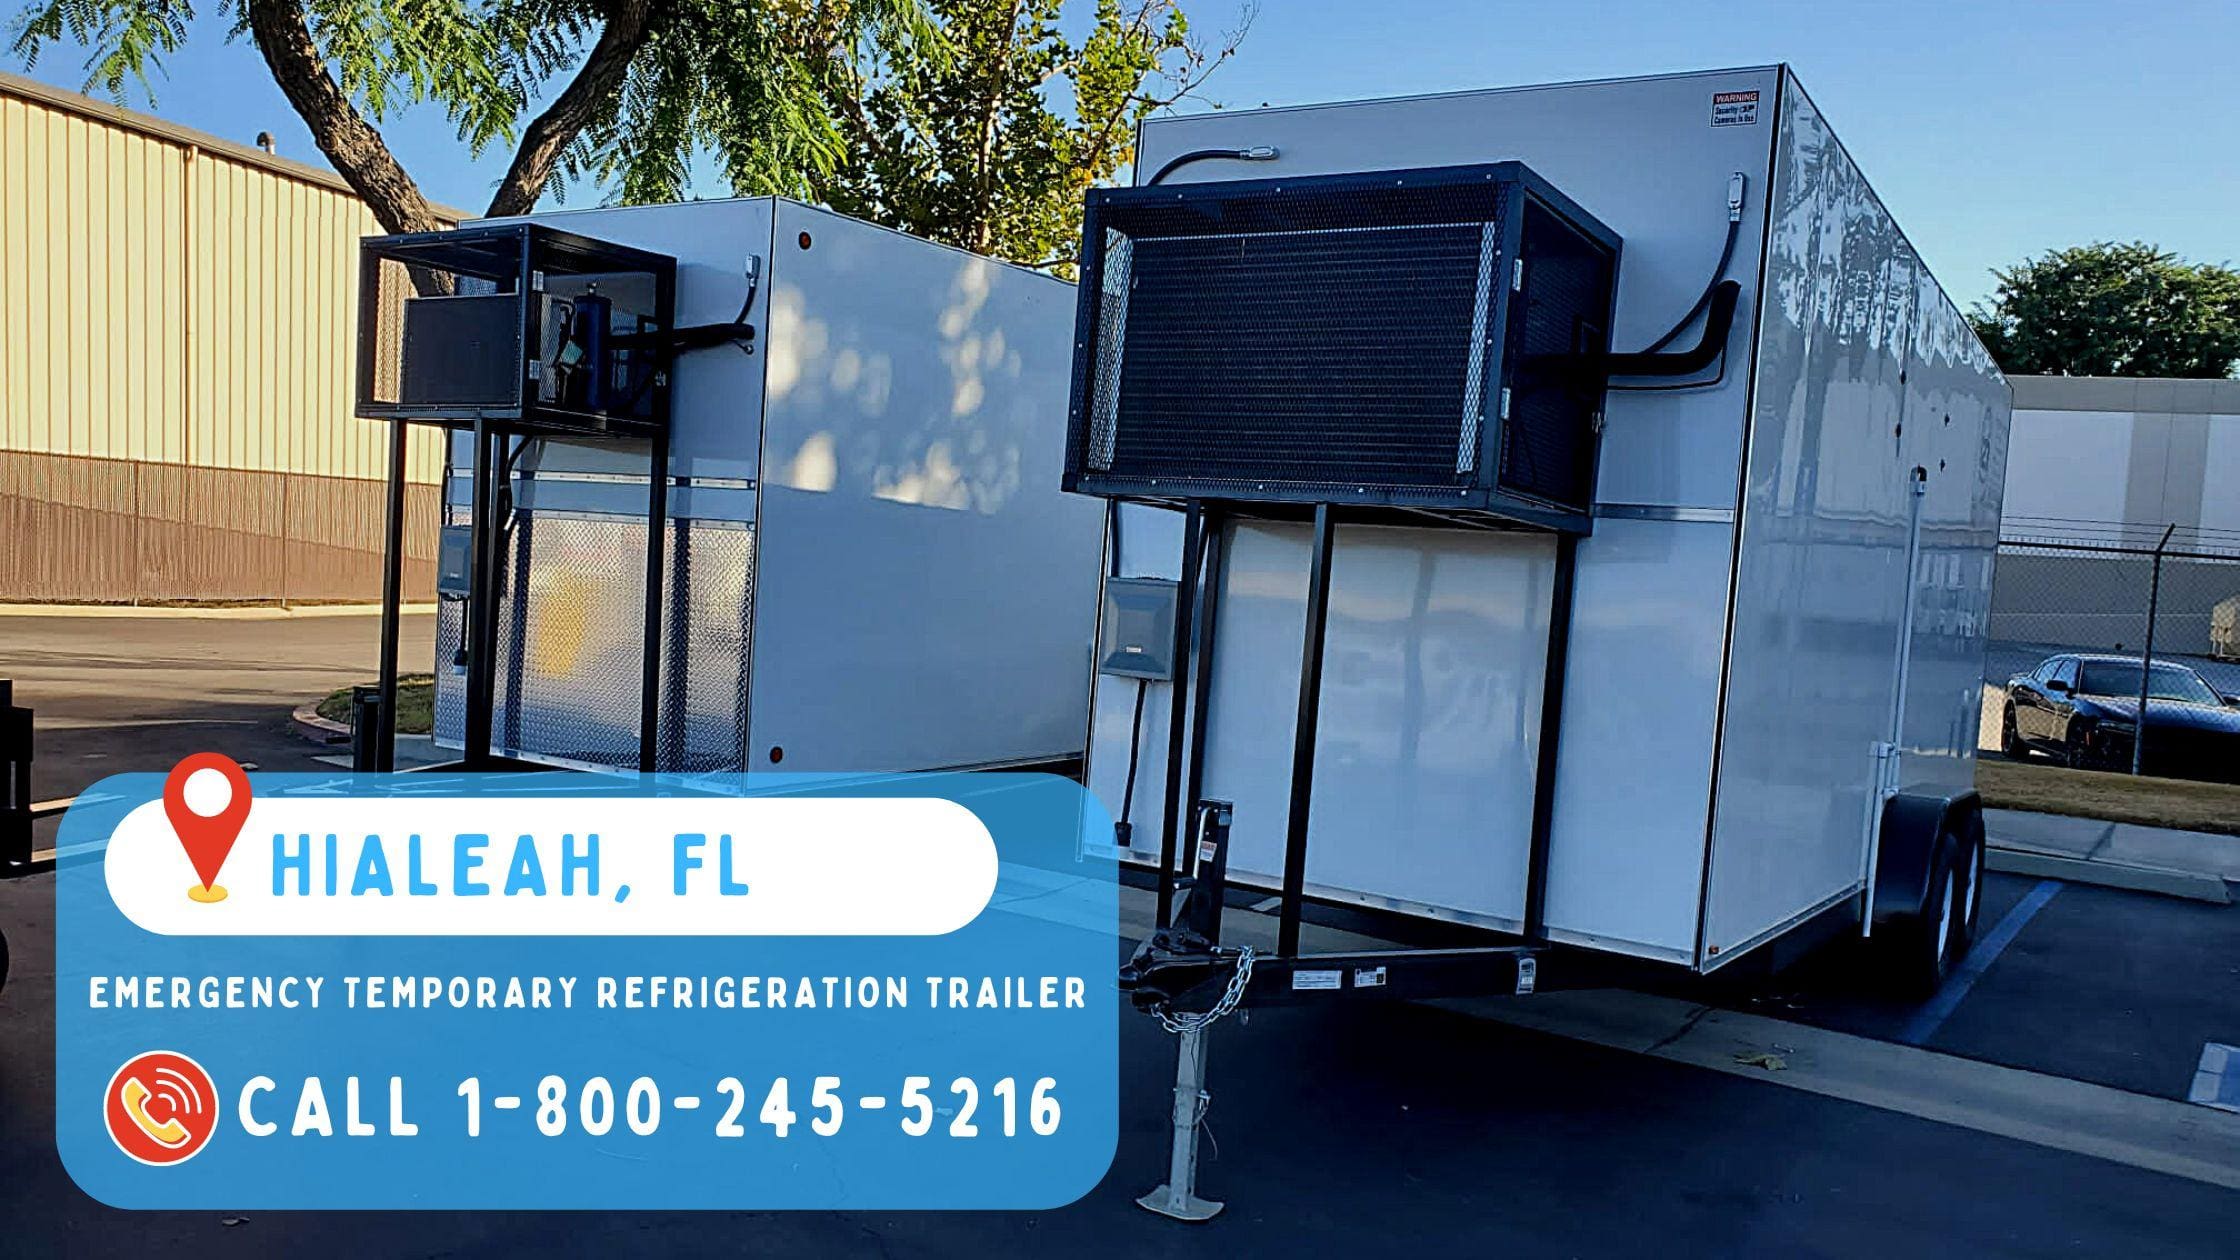 Emergency Temporary refrigeration trailer in Hialeah